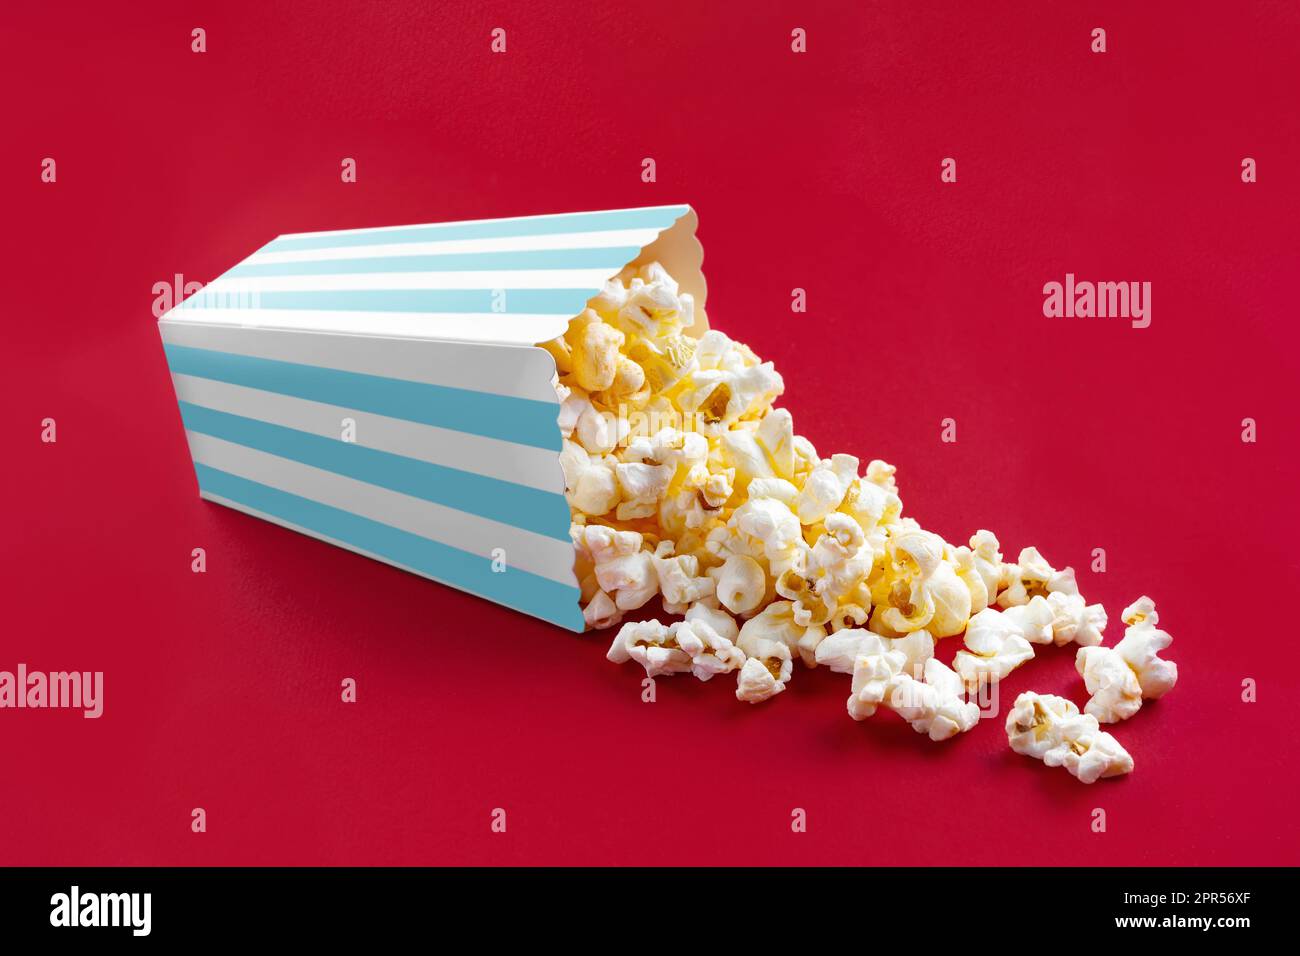 Funko Pop!: Cubo de palomitas de maíz de película